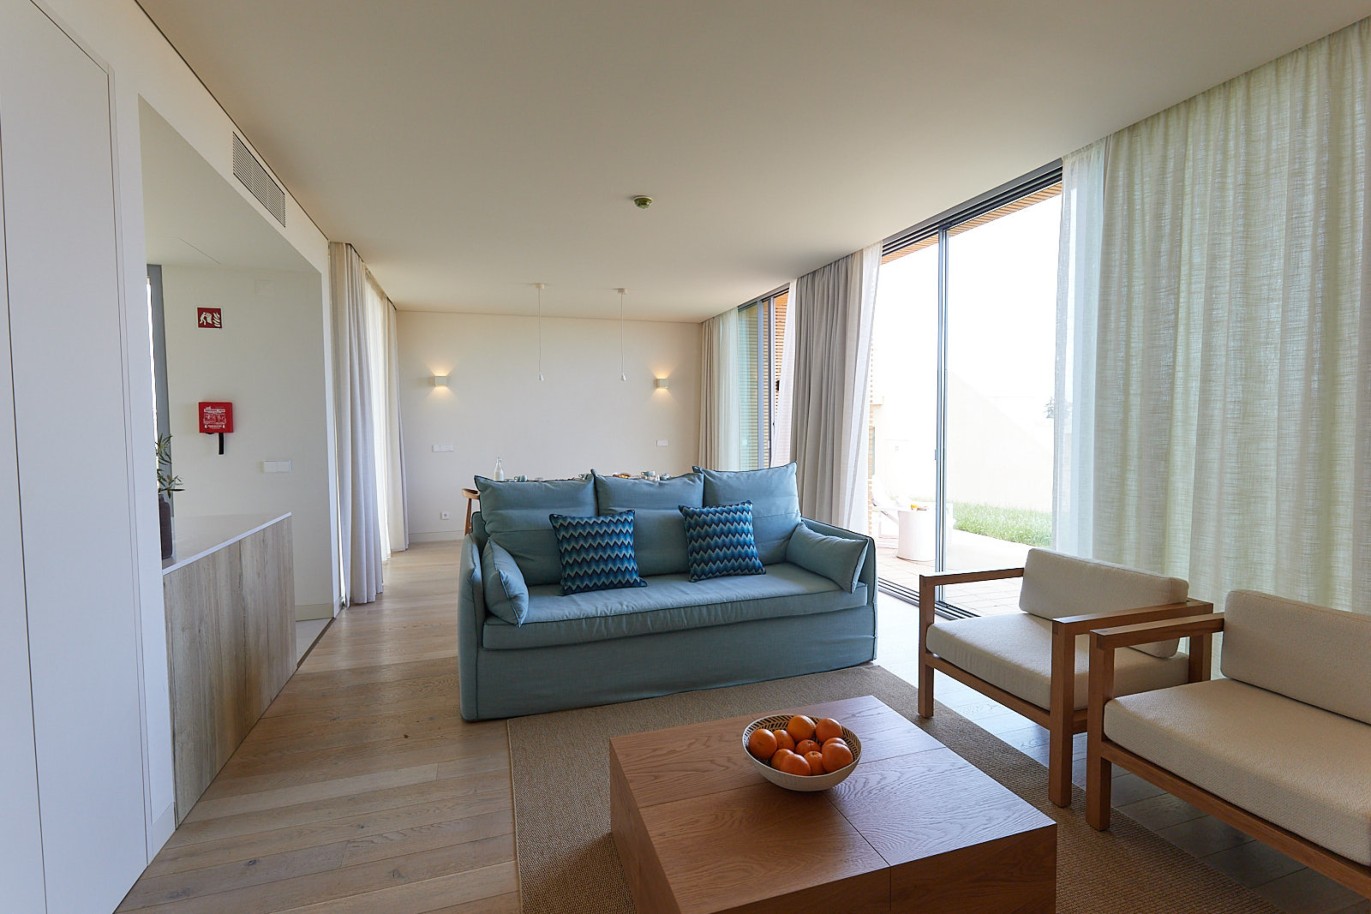 2 bedroom apartment in resort, for sale in Porches, Algarve_230782